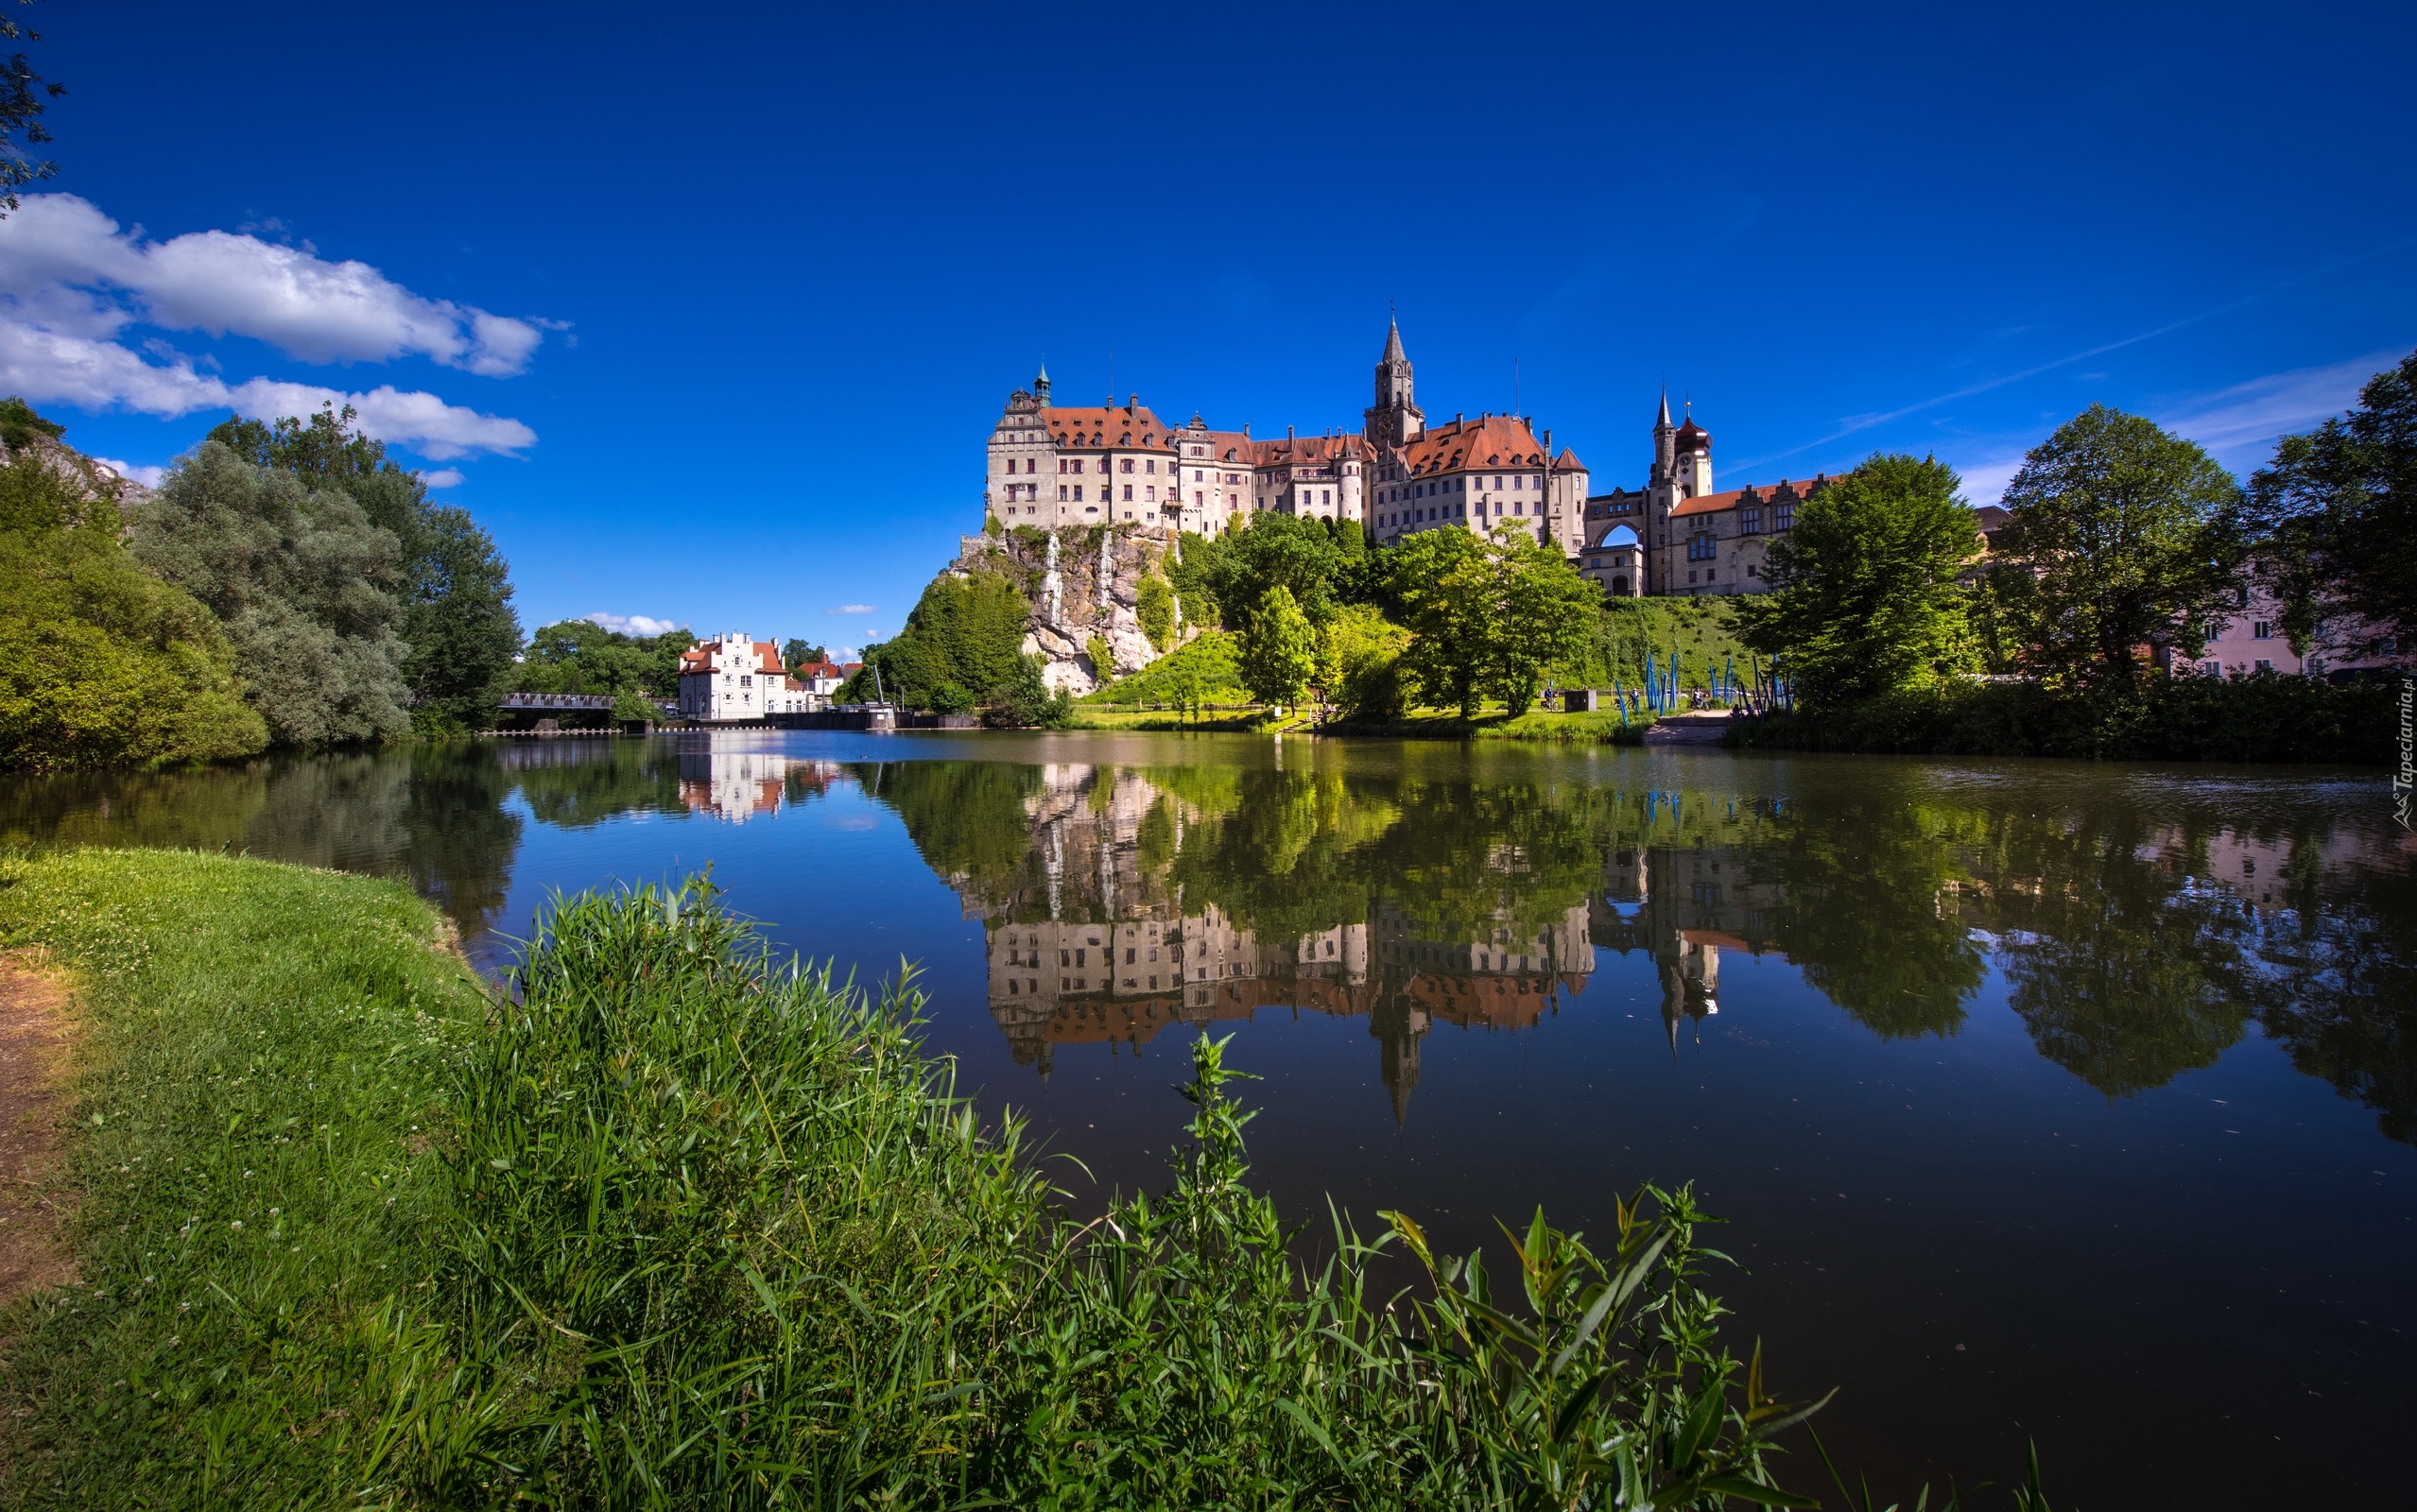 Niemcy, Zamek Sigmaringen, Rzeka Dunaj